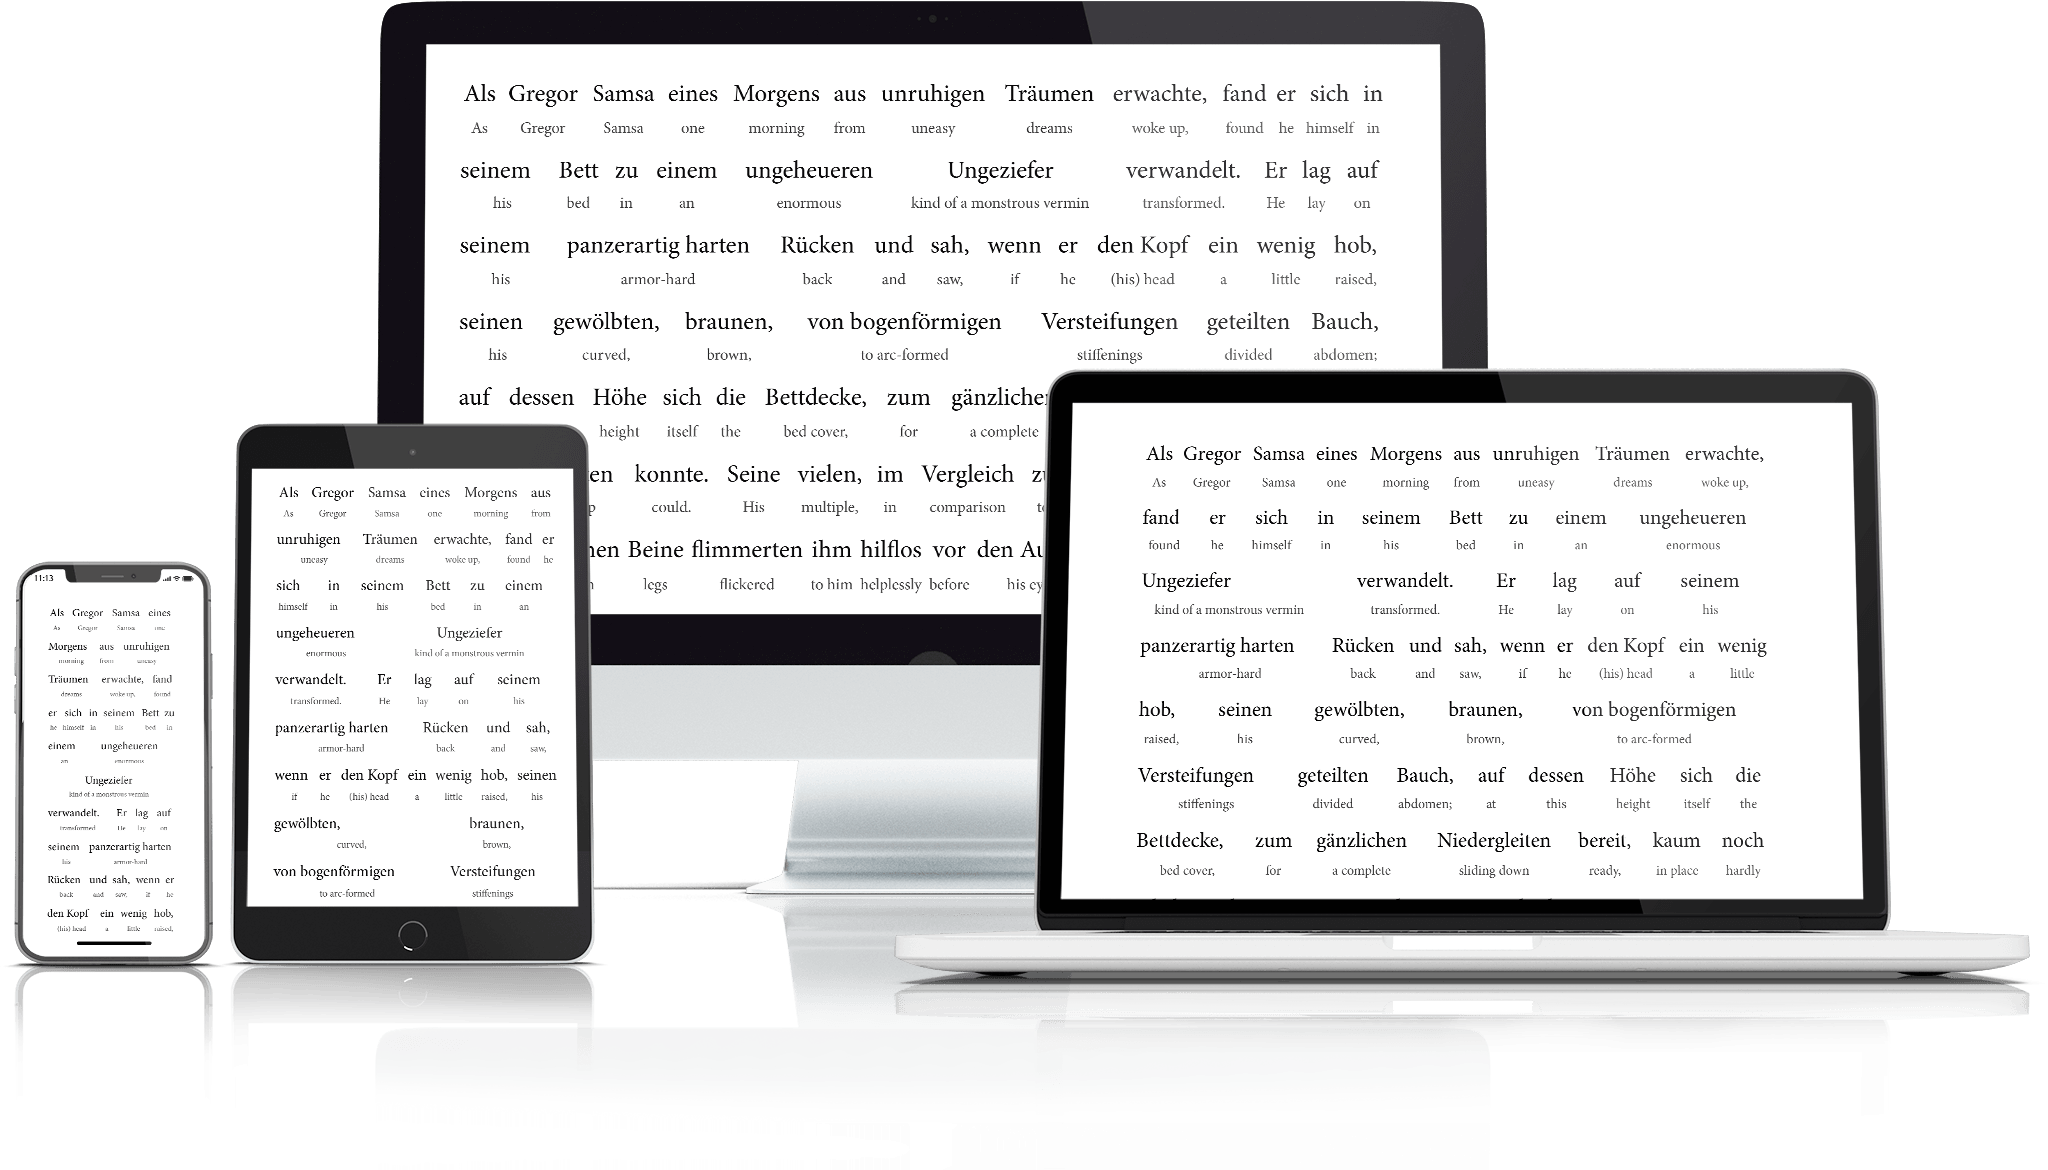 Interlinear books work on multiple device types